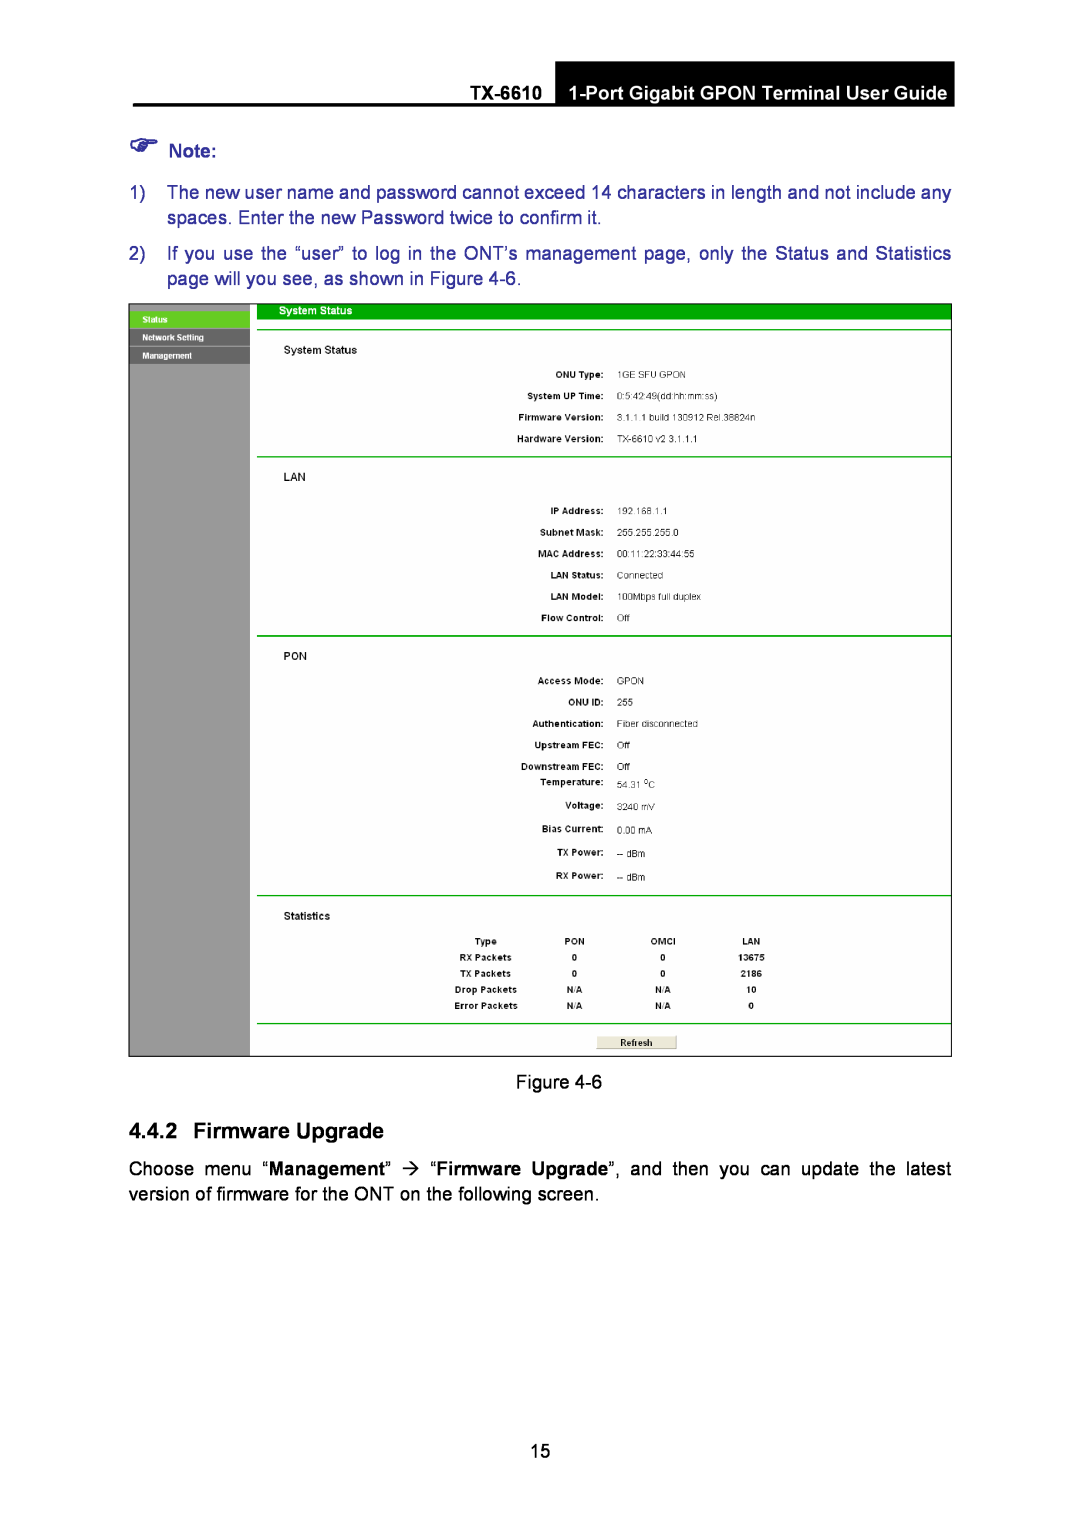 TP-Link manual Firmware Upgrade, TX-6610 1-Port Gigabit GPON Terminal User Guide,  Note 